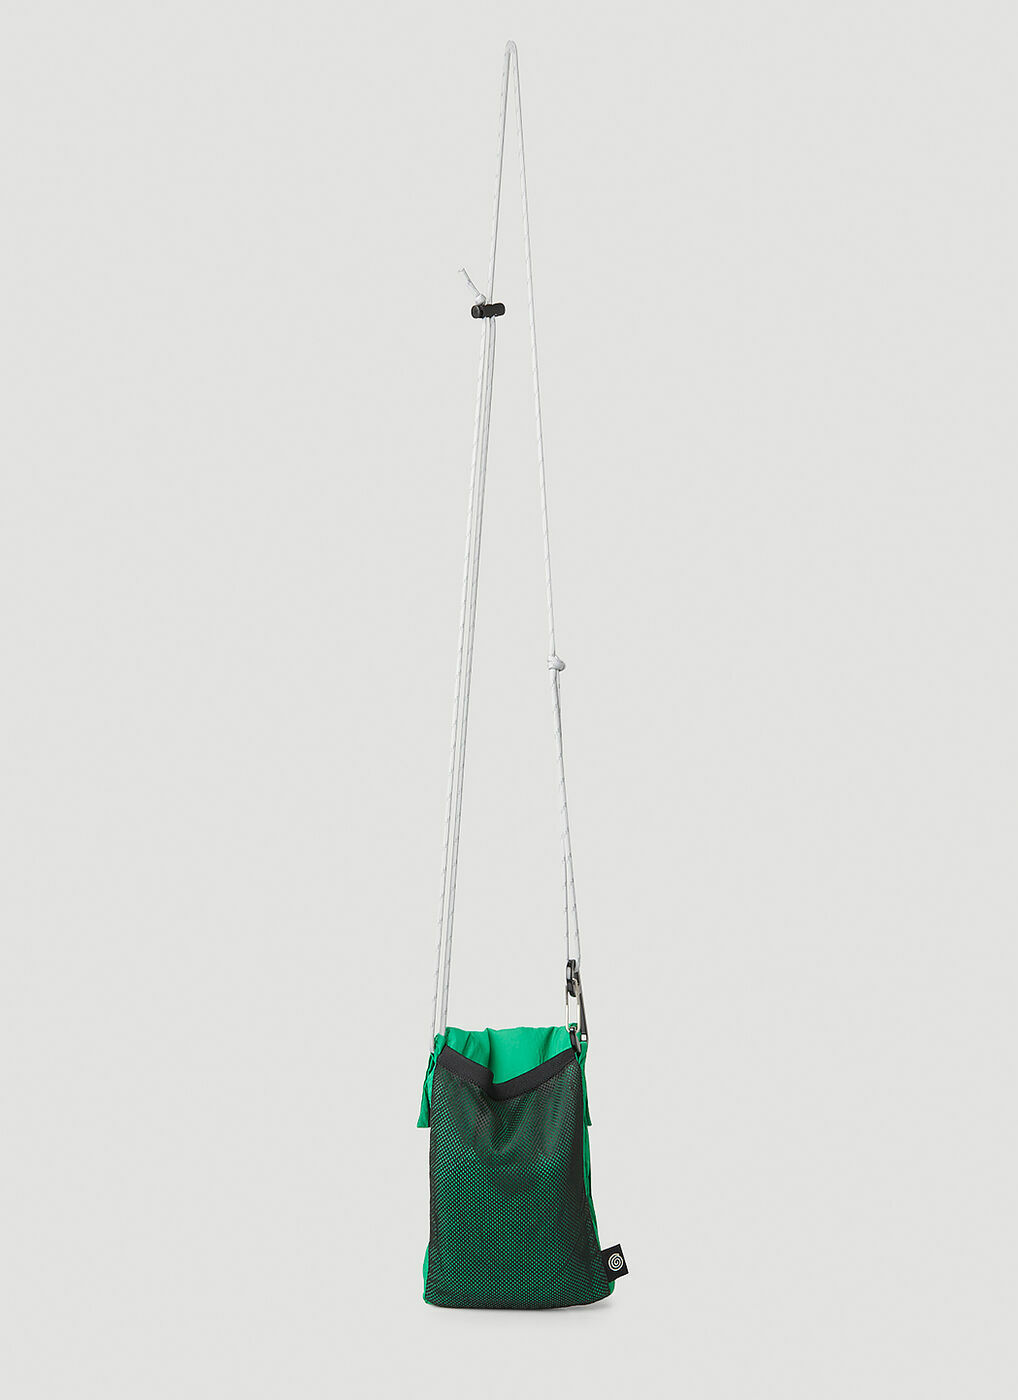 Overjas moeder Notitie Boiler Room x P.A.M. - Logo Pouch Crossbody Bag in Green